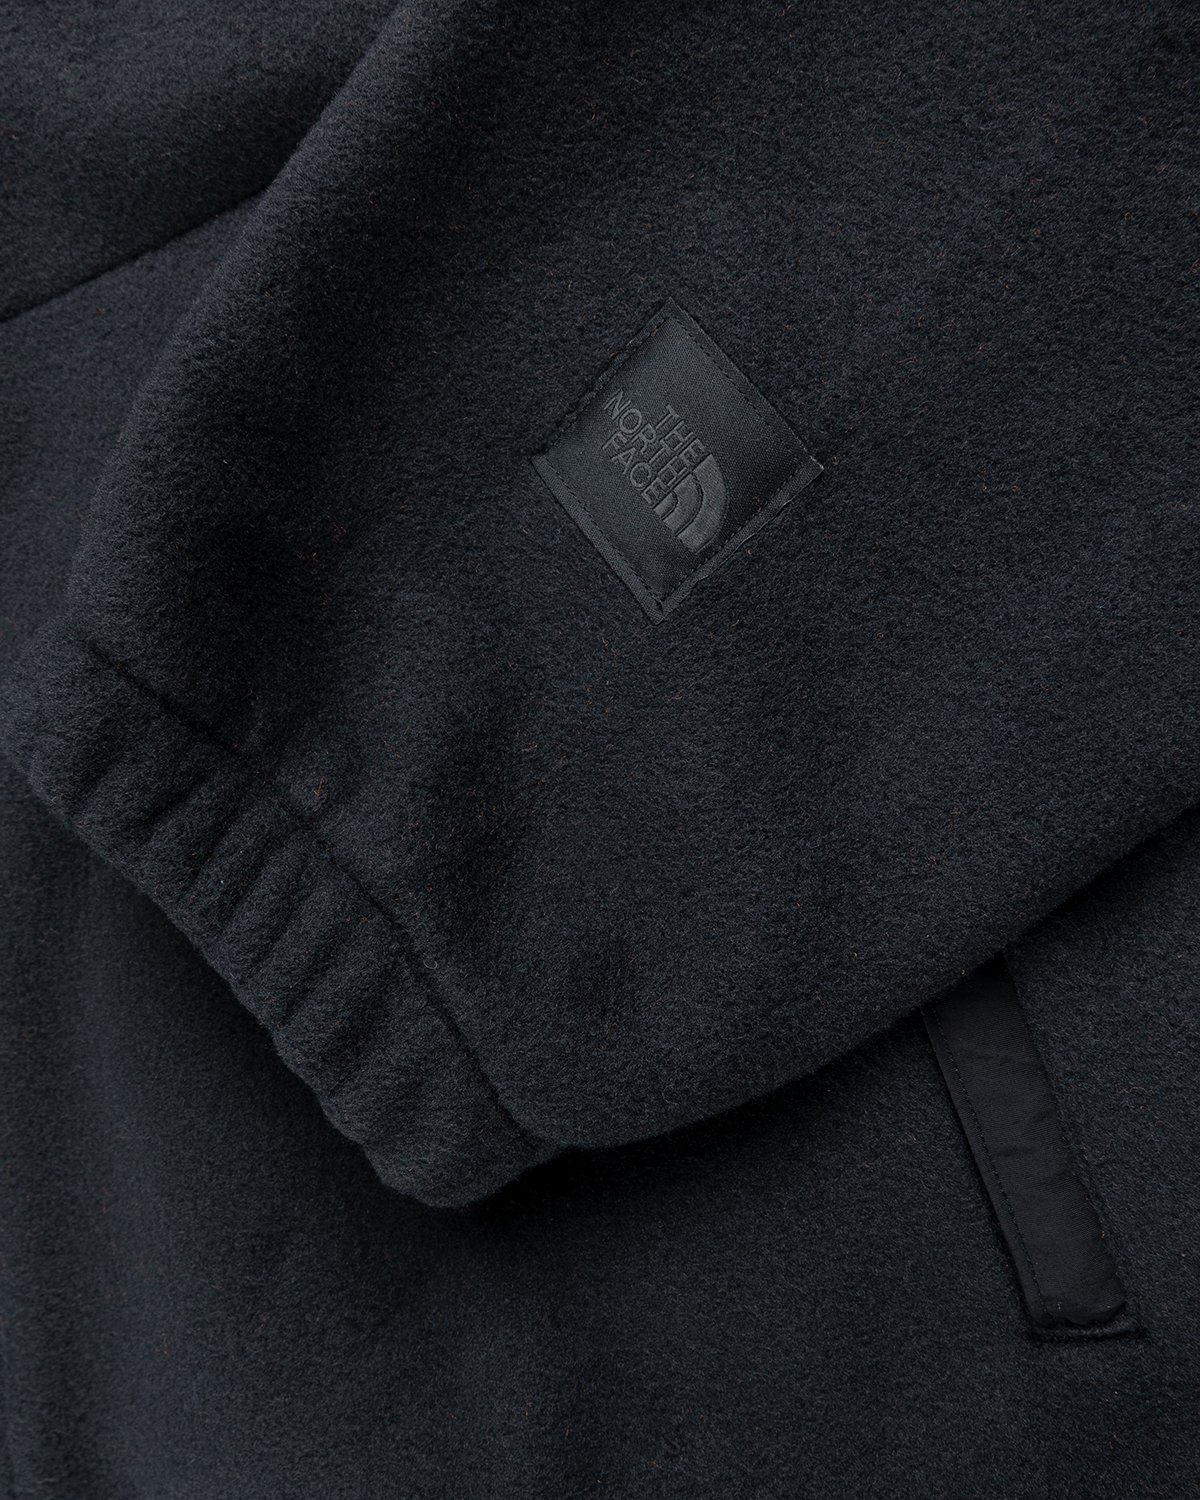 The North Face - CTAE Full-Zip Fleece Black - Clothing - Black - Image 3